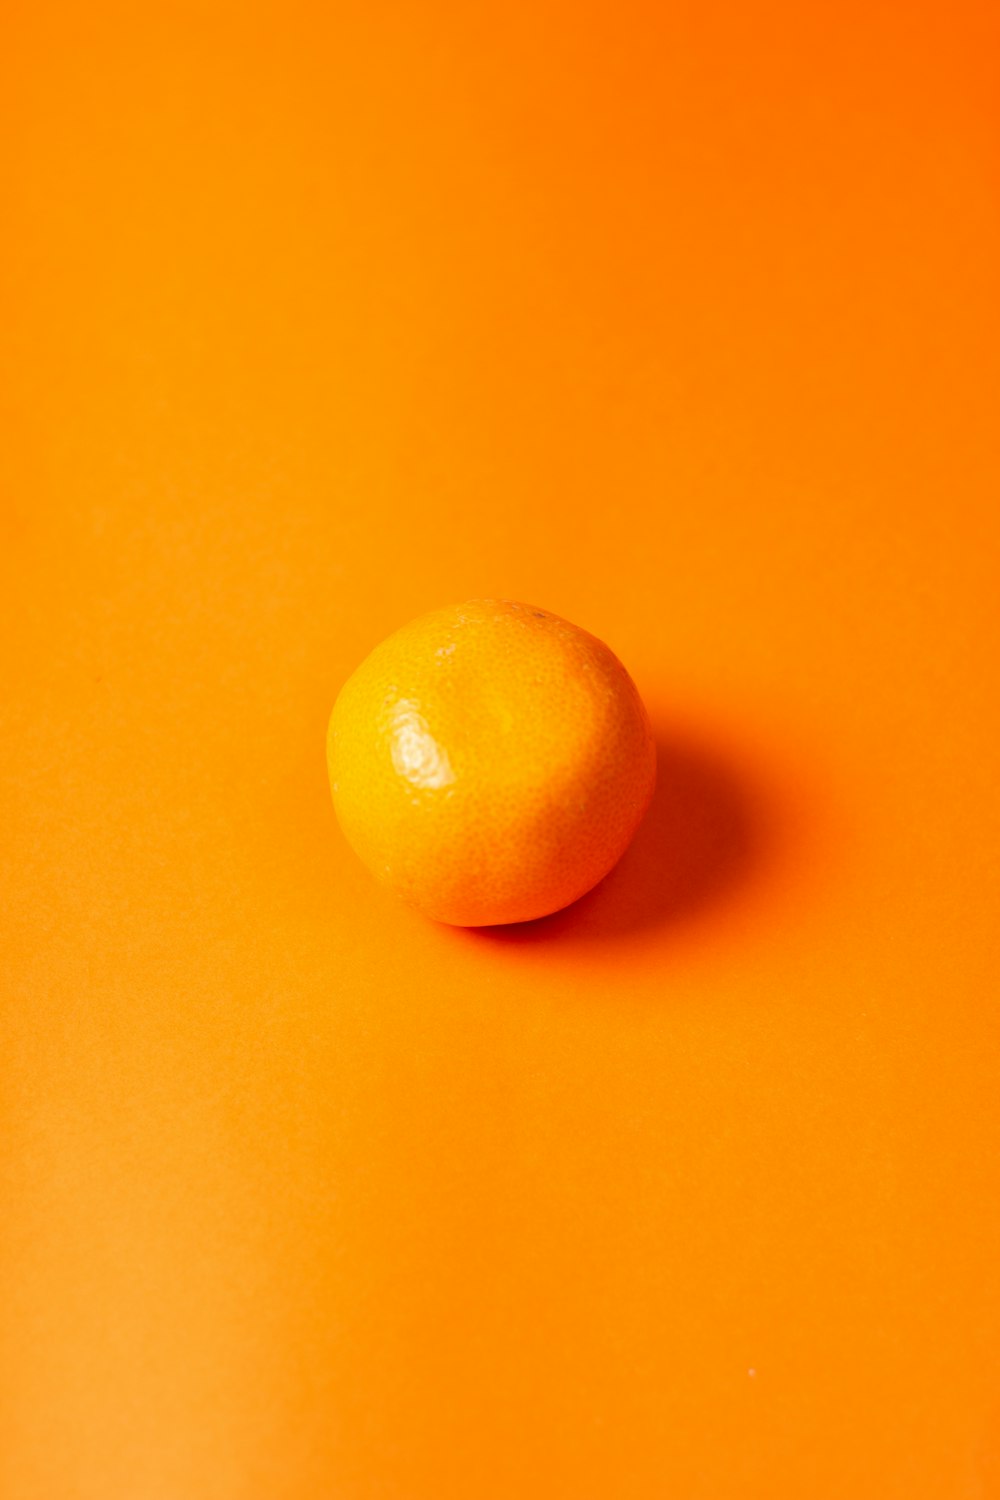 orange fruit on yellow surface